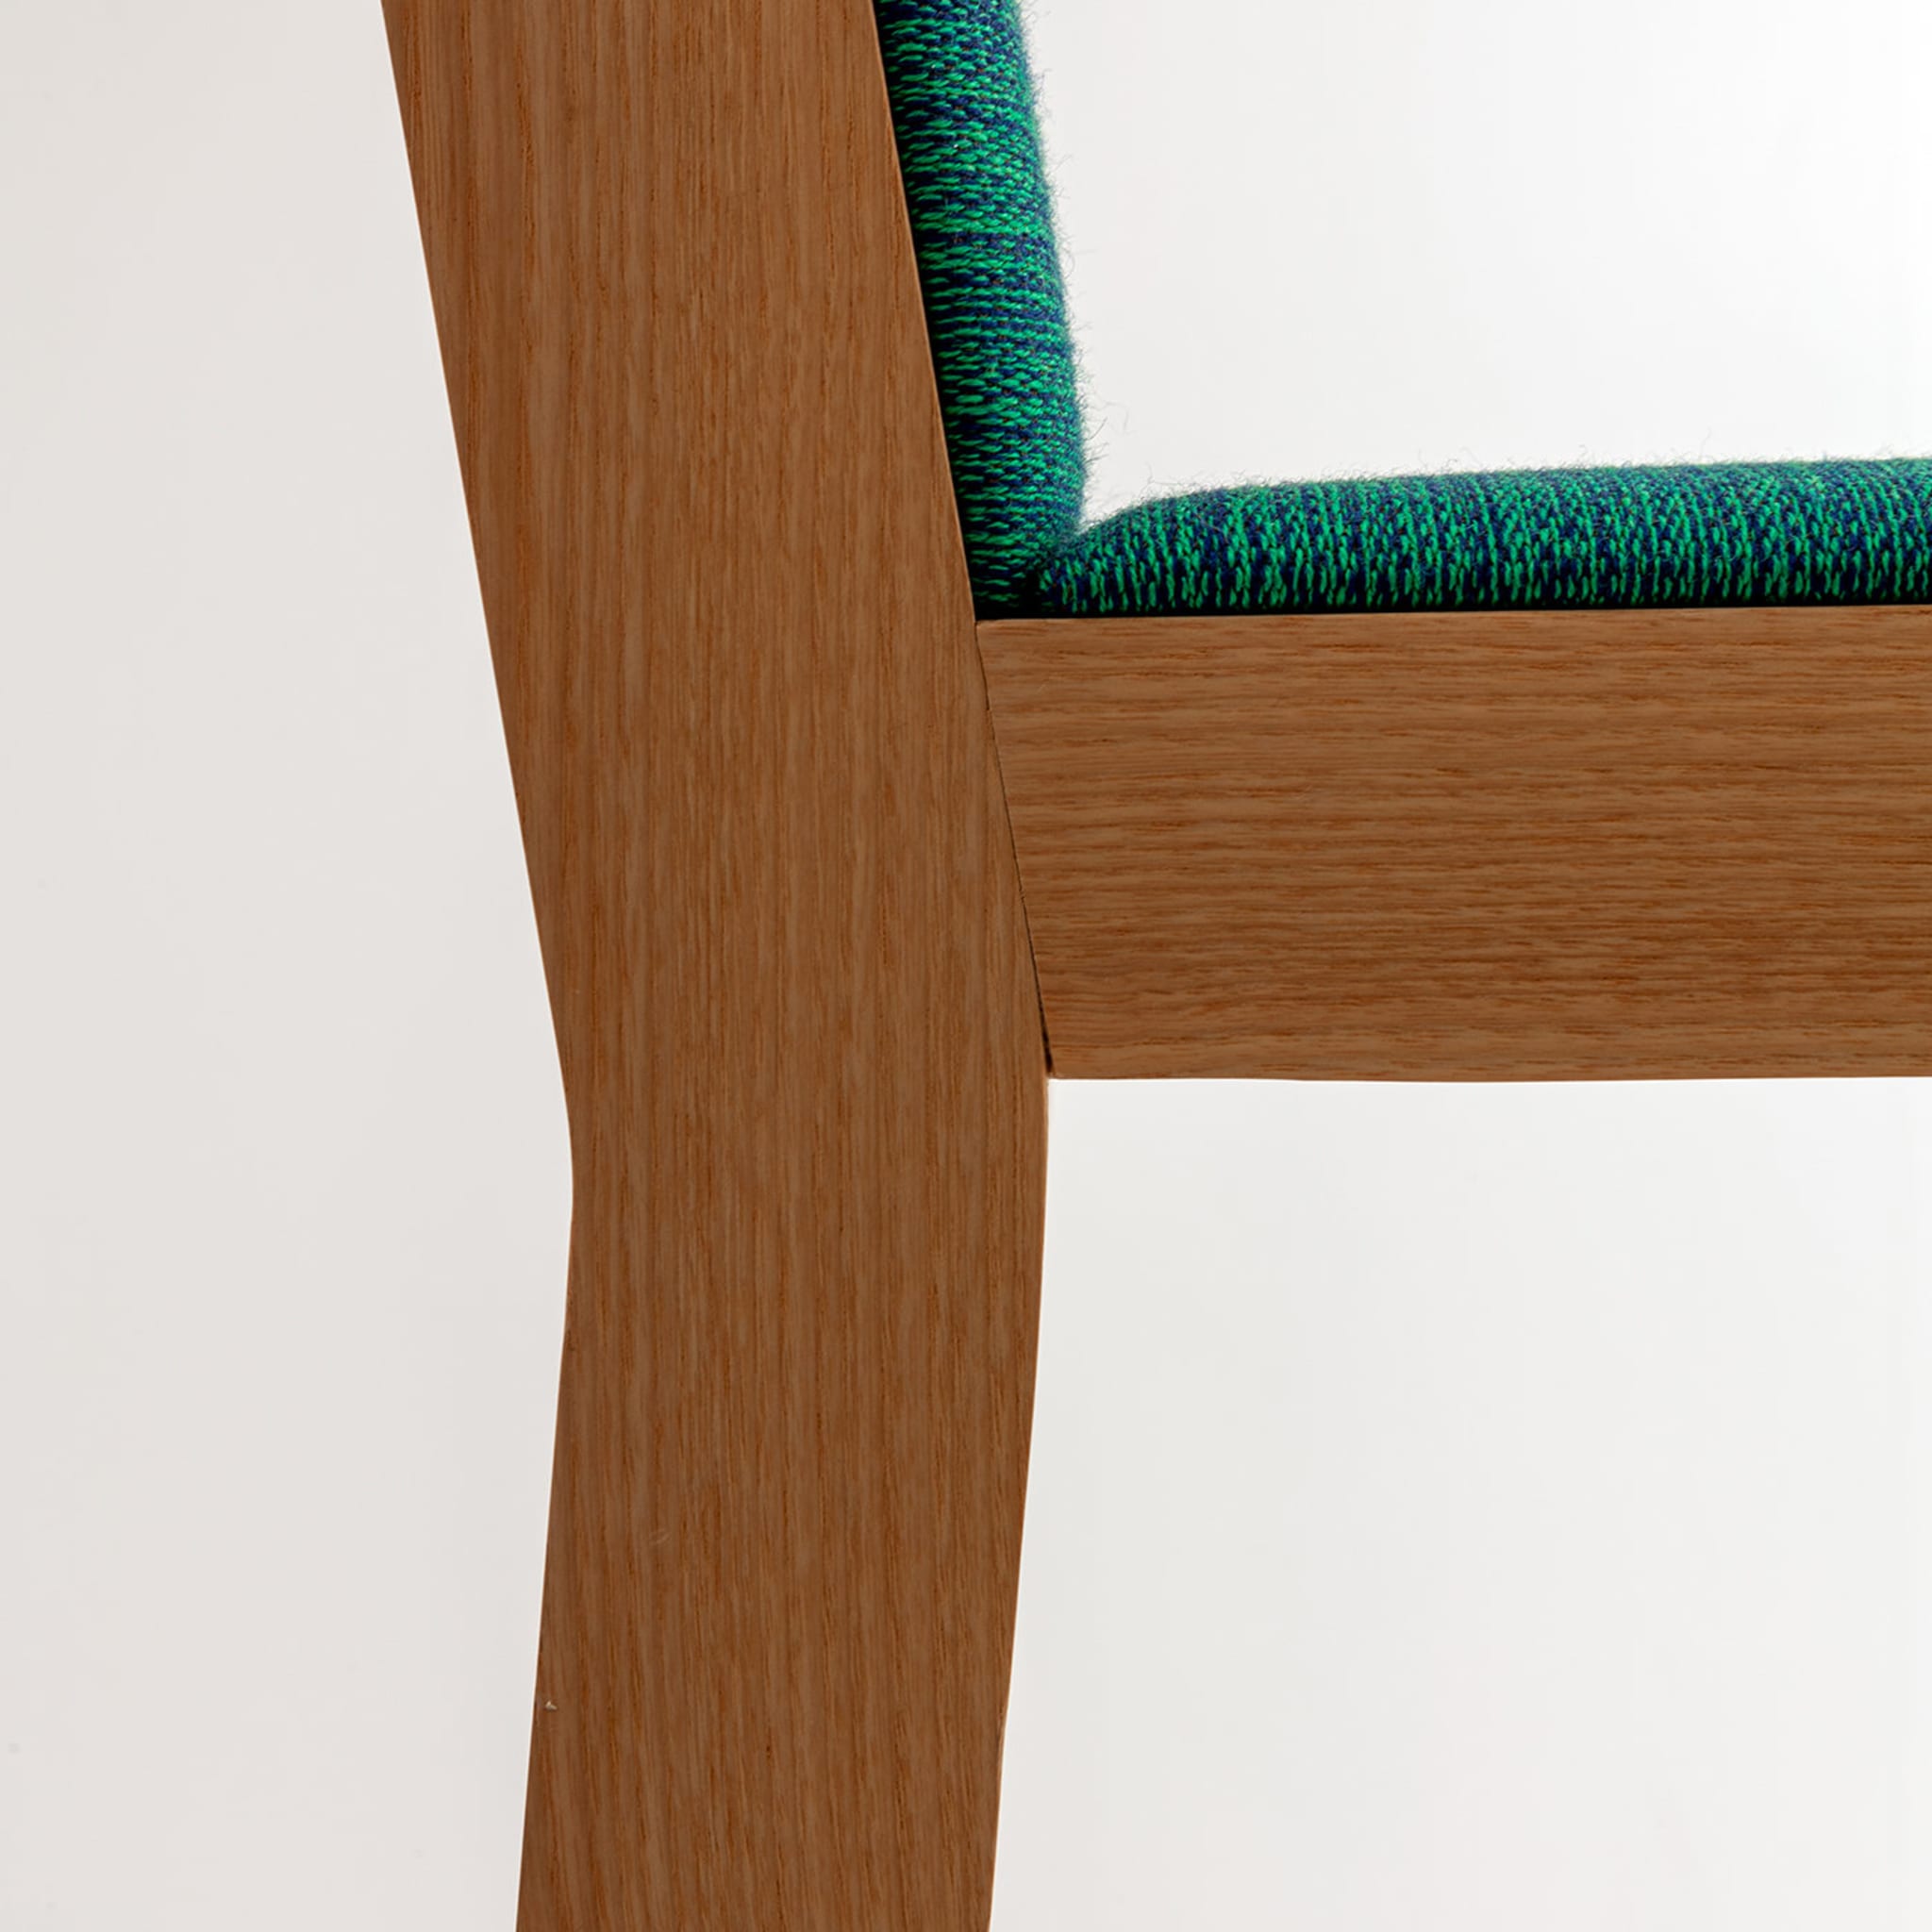 BD 20 L Chair by Bartoli Design - Alternative view 2